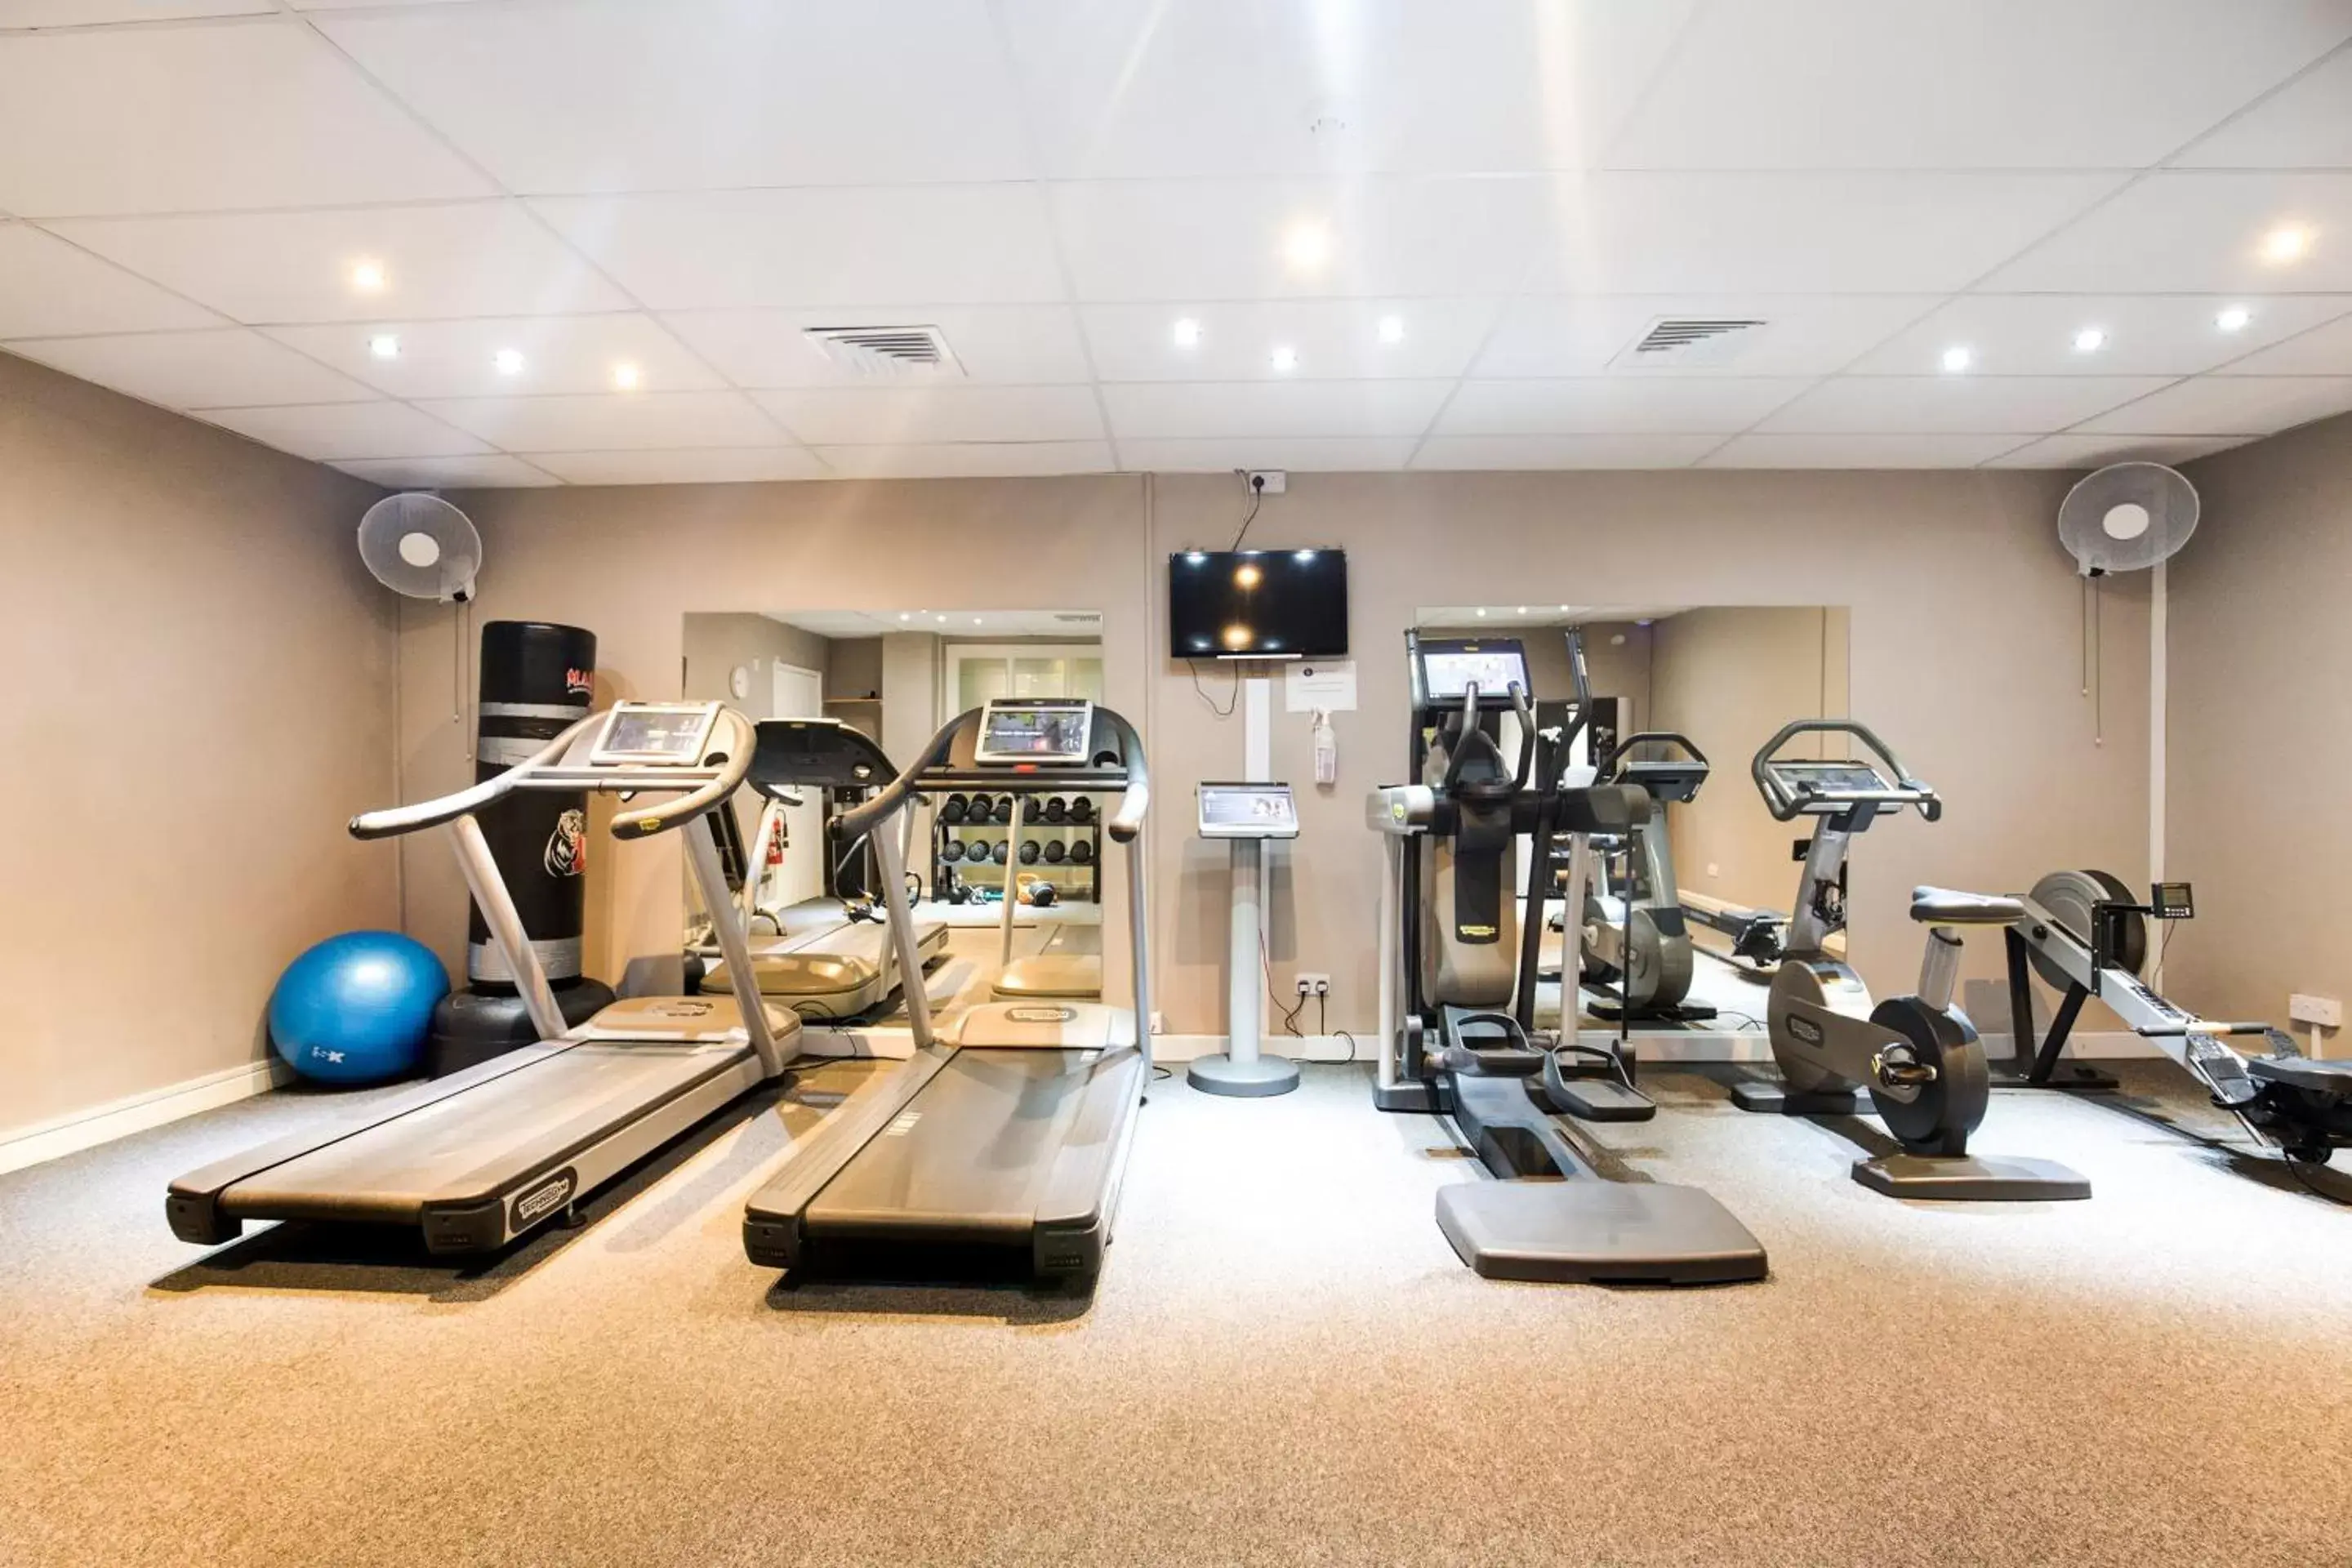 Fitness centre/facilities, Fitness Center/Facilities in Barony Castle Hotel